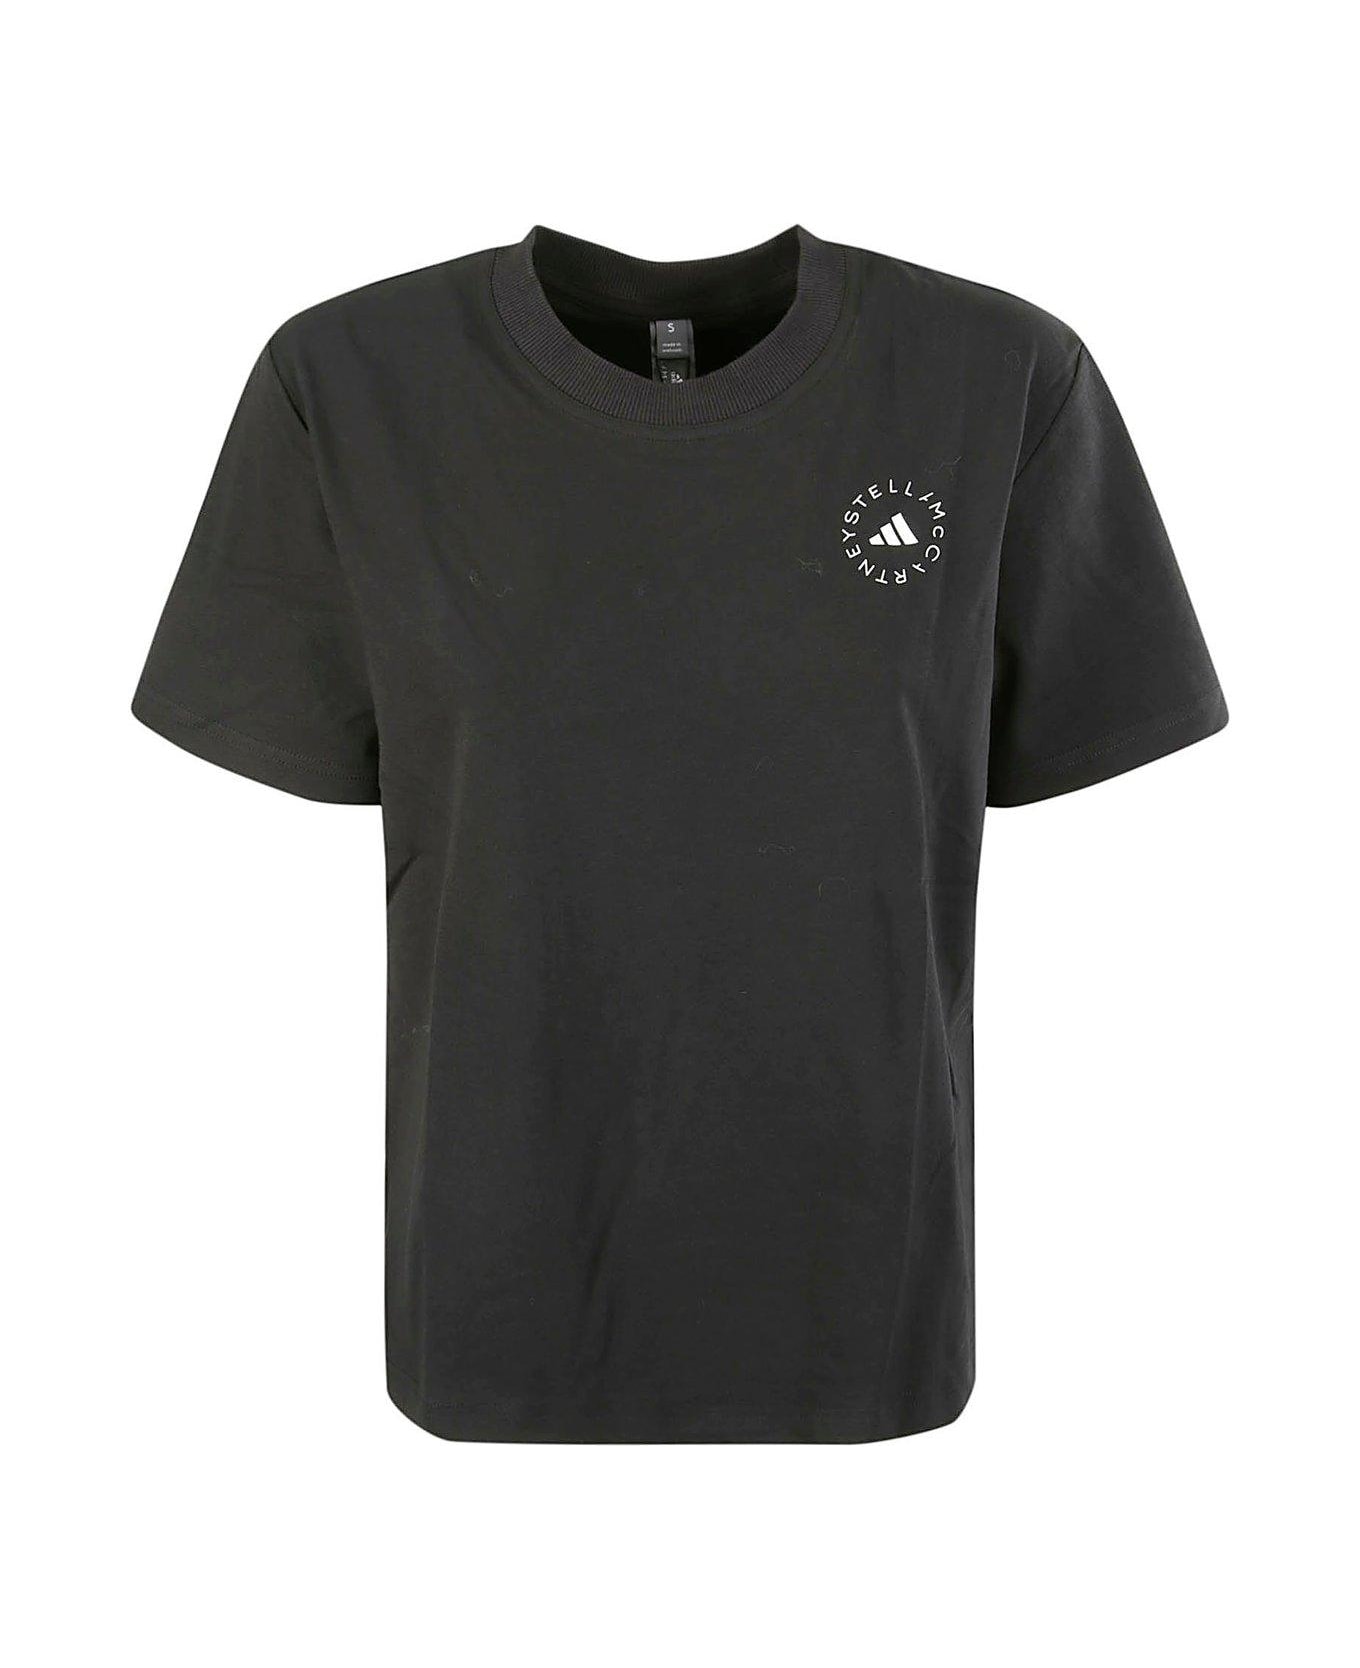 Adidas by Stella McCartney Truecasuals Crewneck T-shirt - Black Tシャツ